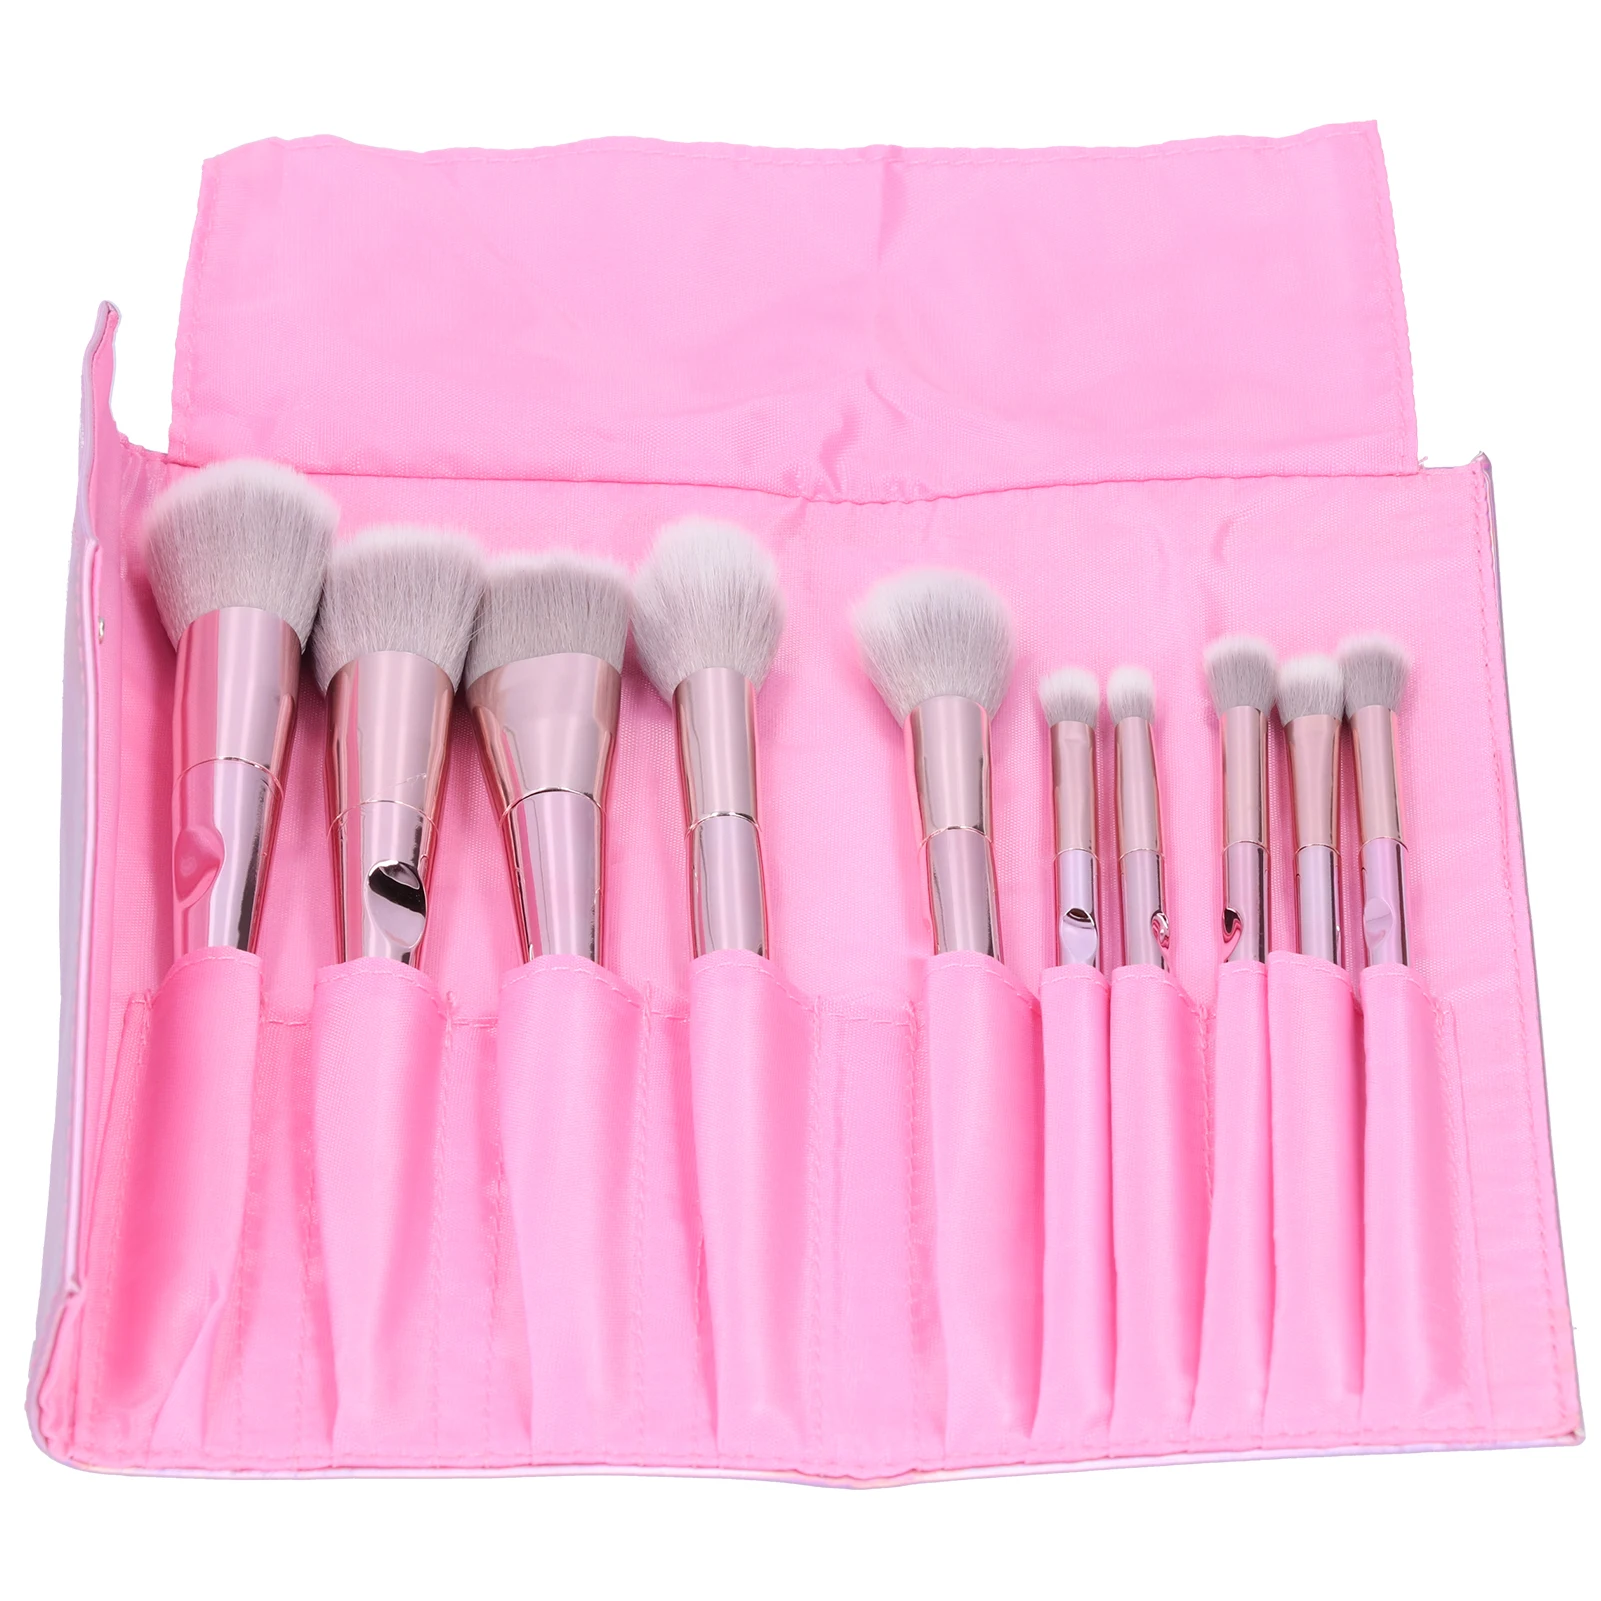 

10PCS Makeup Brushes Set Soft Bristles Rose Gold Color for Blush Eye Shadow Eyebrow Highlight